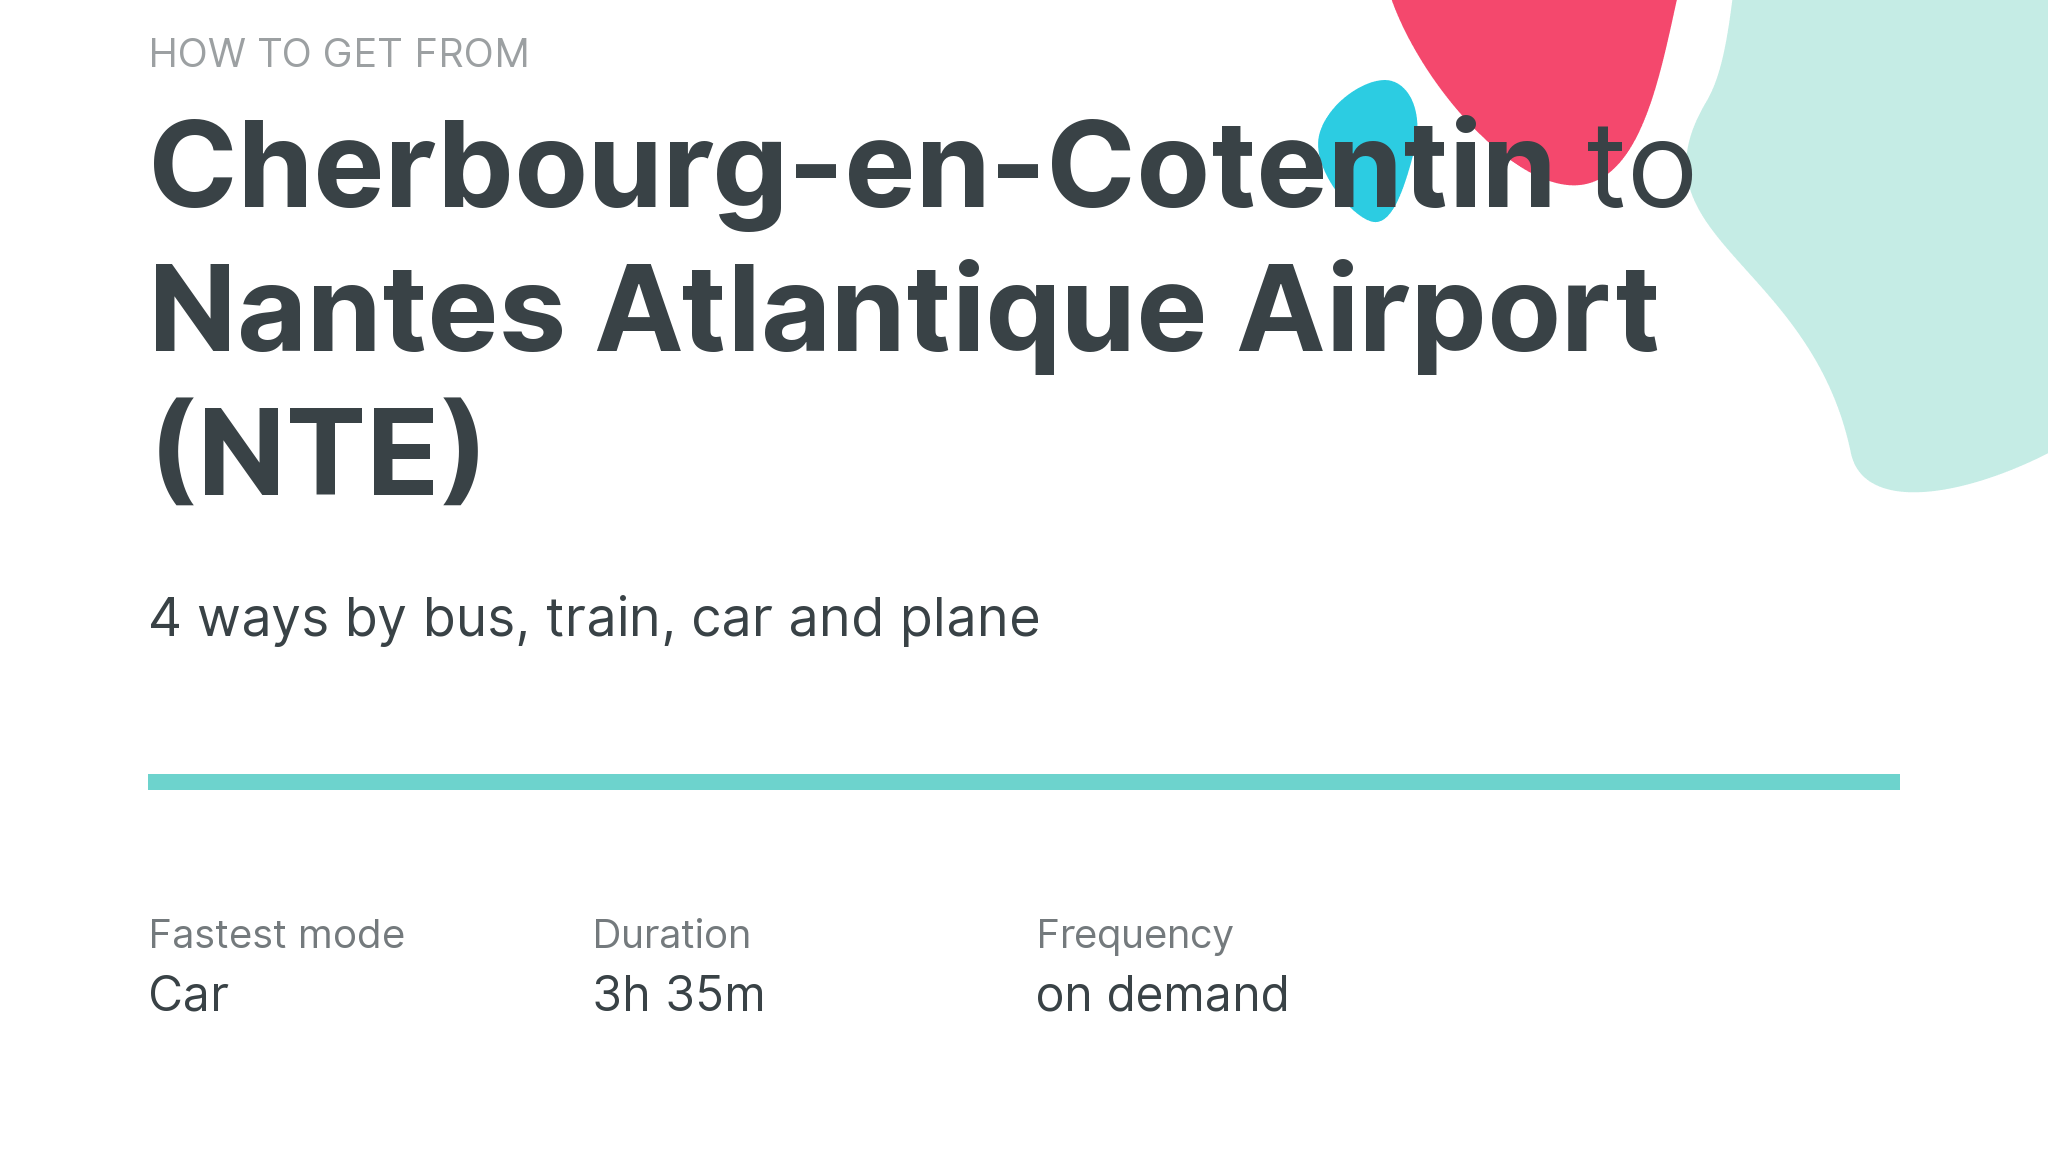 How do I get from Cherbourg-en-Cotentin to Nantes Atlantique Airport (NTE)